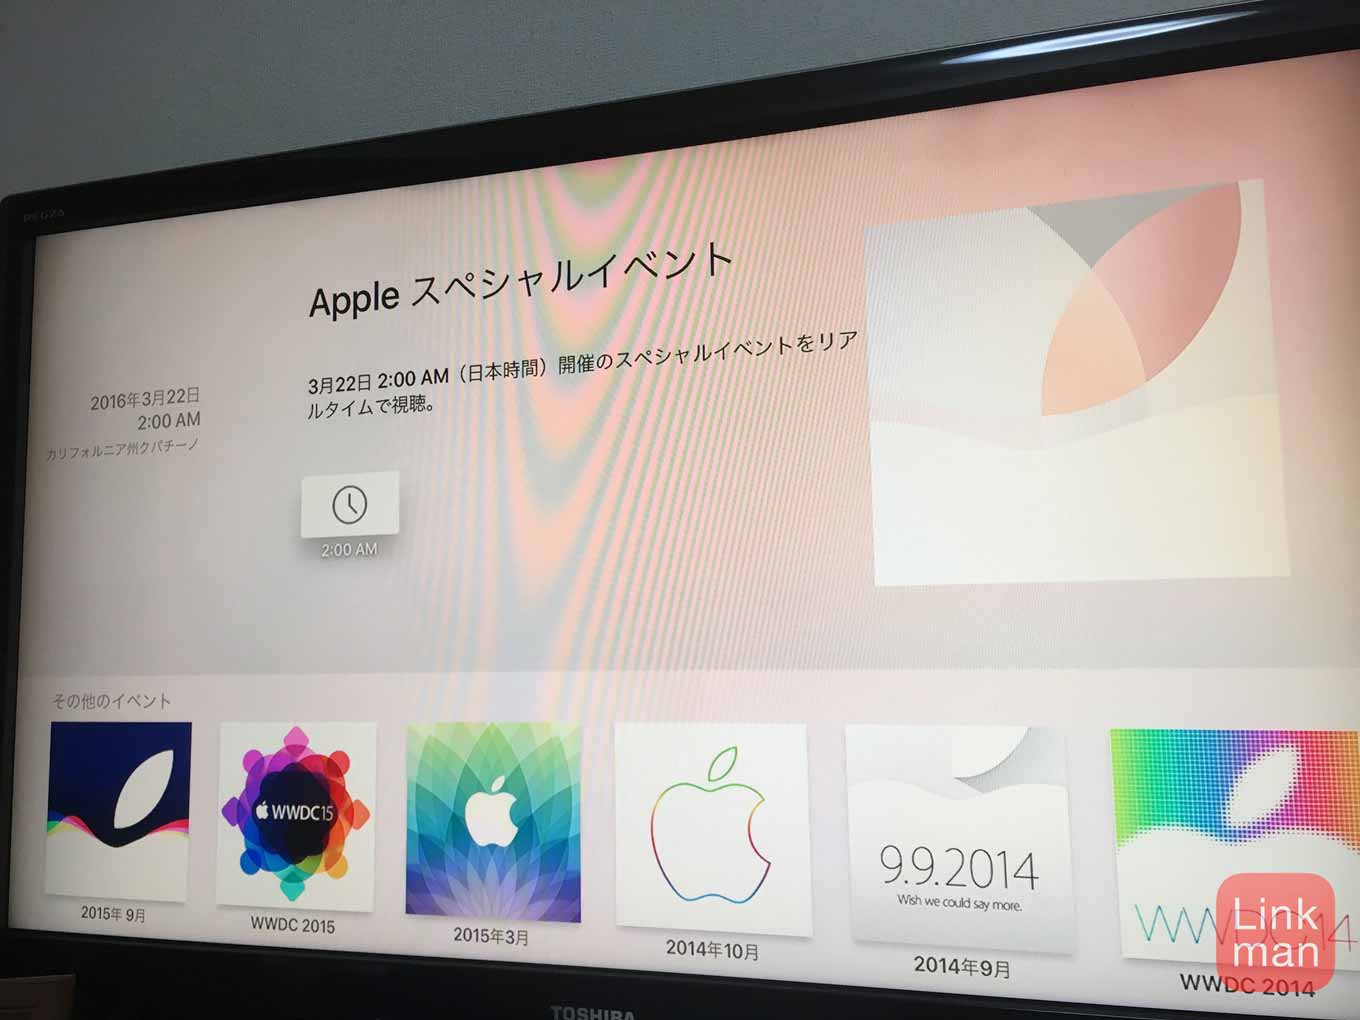 AppleTV-Appleイベントアプリ2